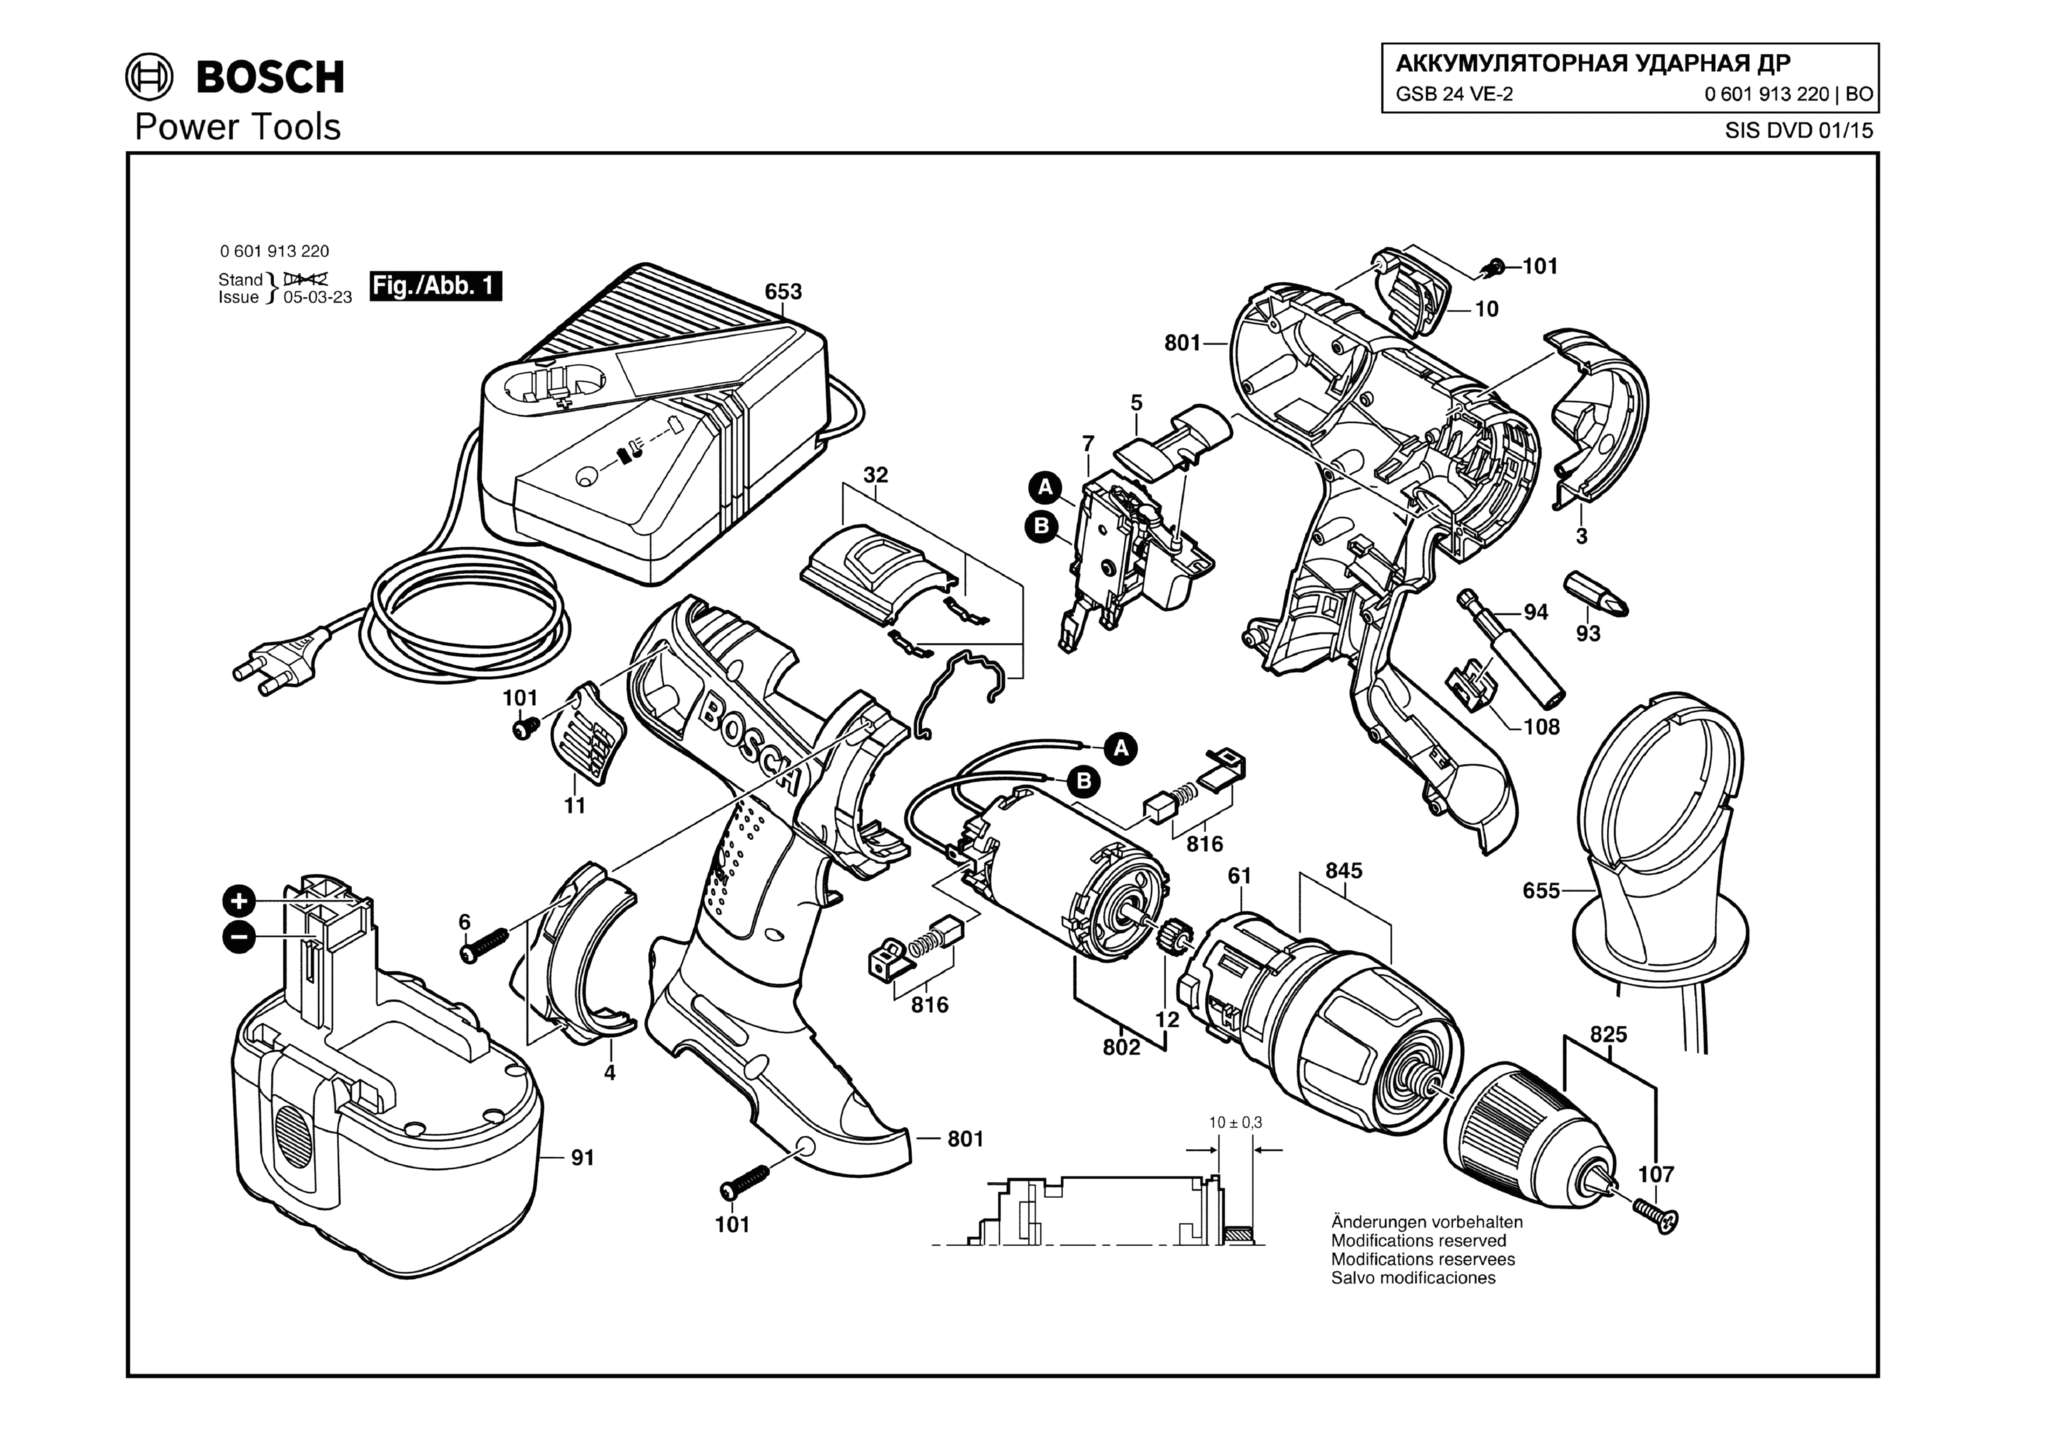 Запчасти, схема и деталировка Bosch GSB 24 VE-2 (ТИП 0601913220)